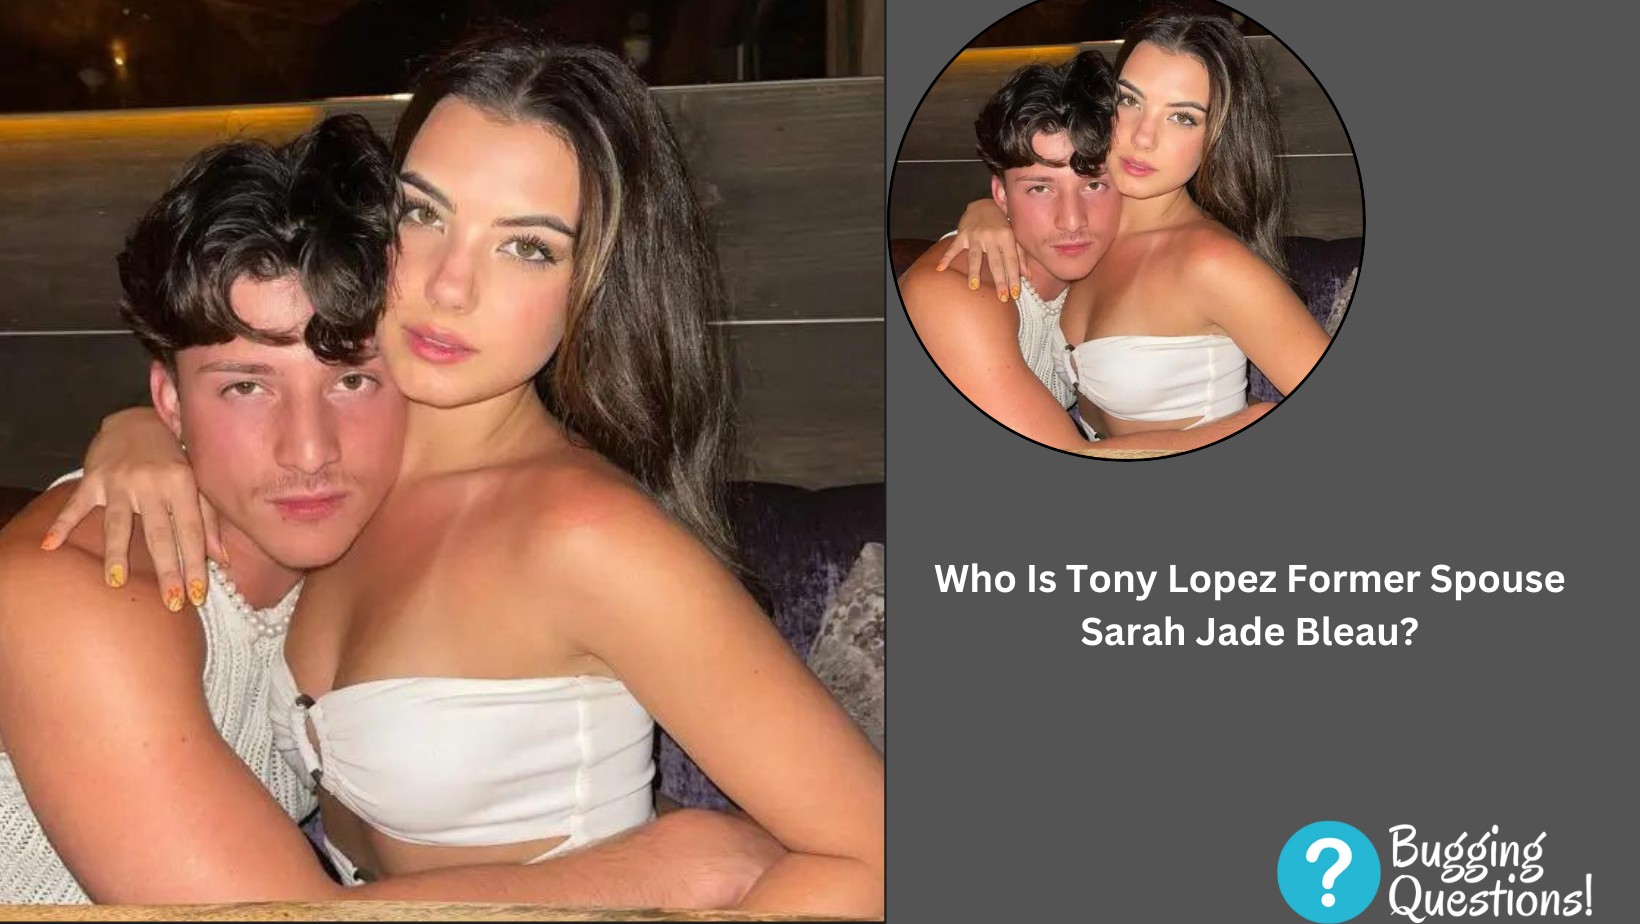 Who Is Tony Lopez Former Spouse Sarah Jade Bleau?